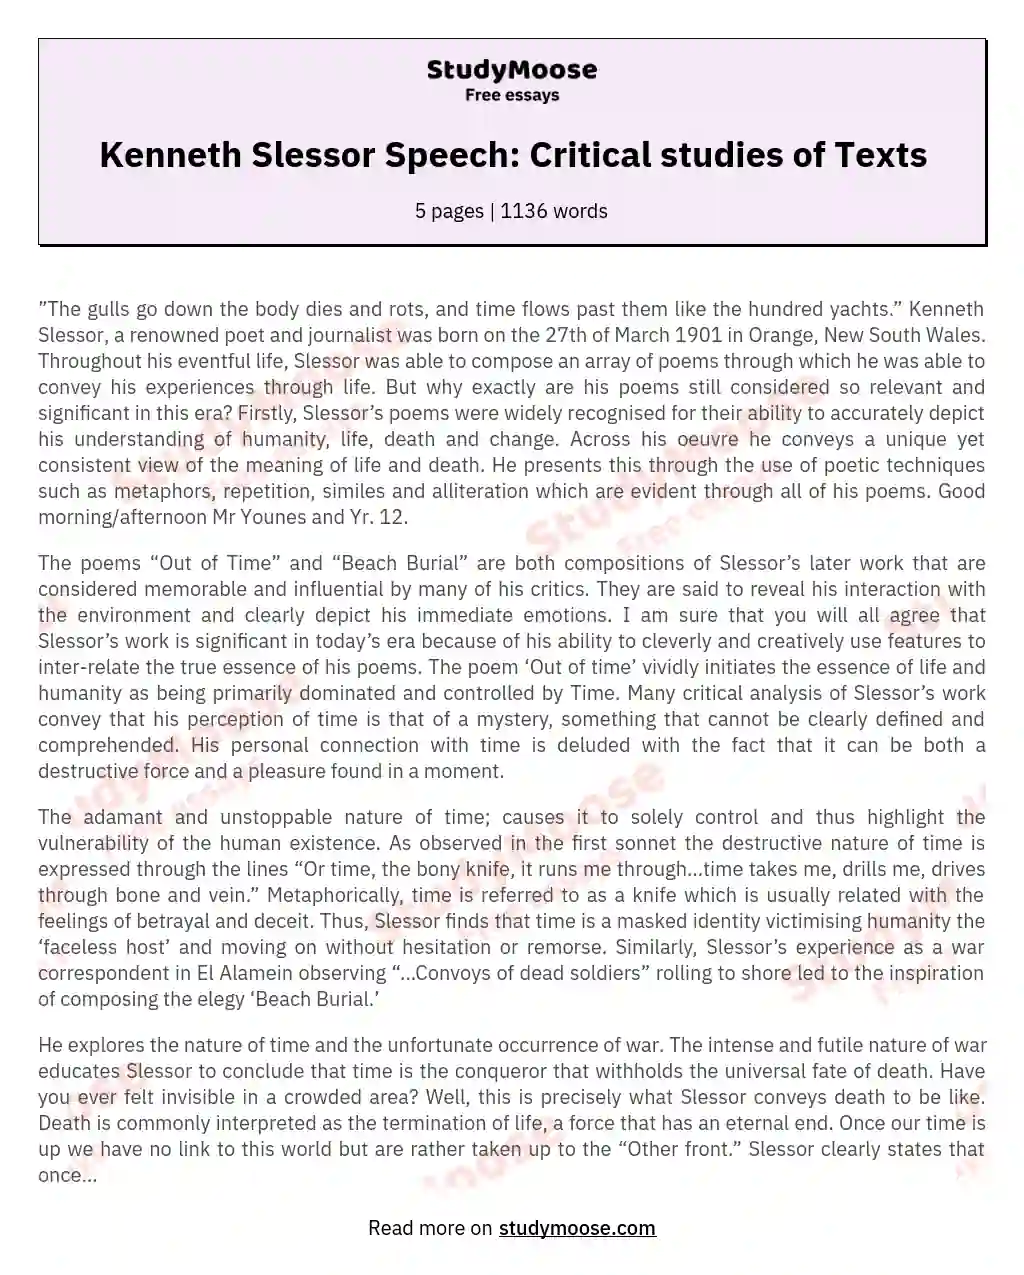 Kenneth Slessor Speech: Critical studies of Texts essay